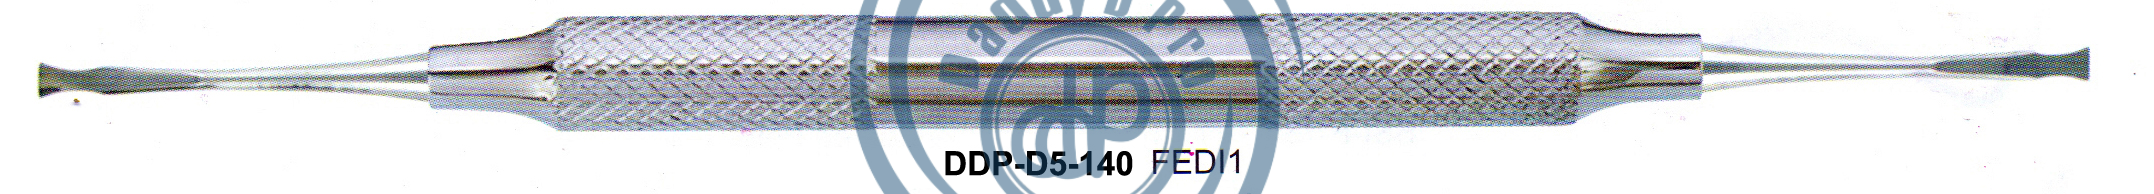 images/DDP-D5-140.png